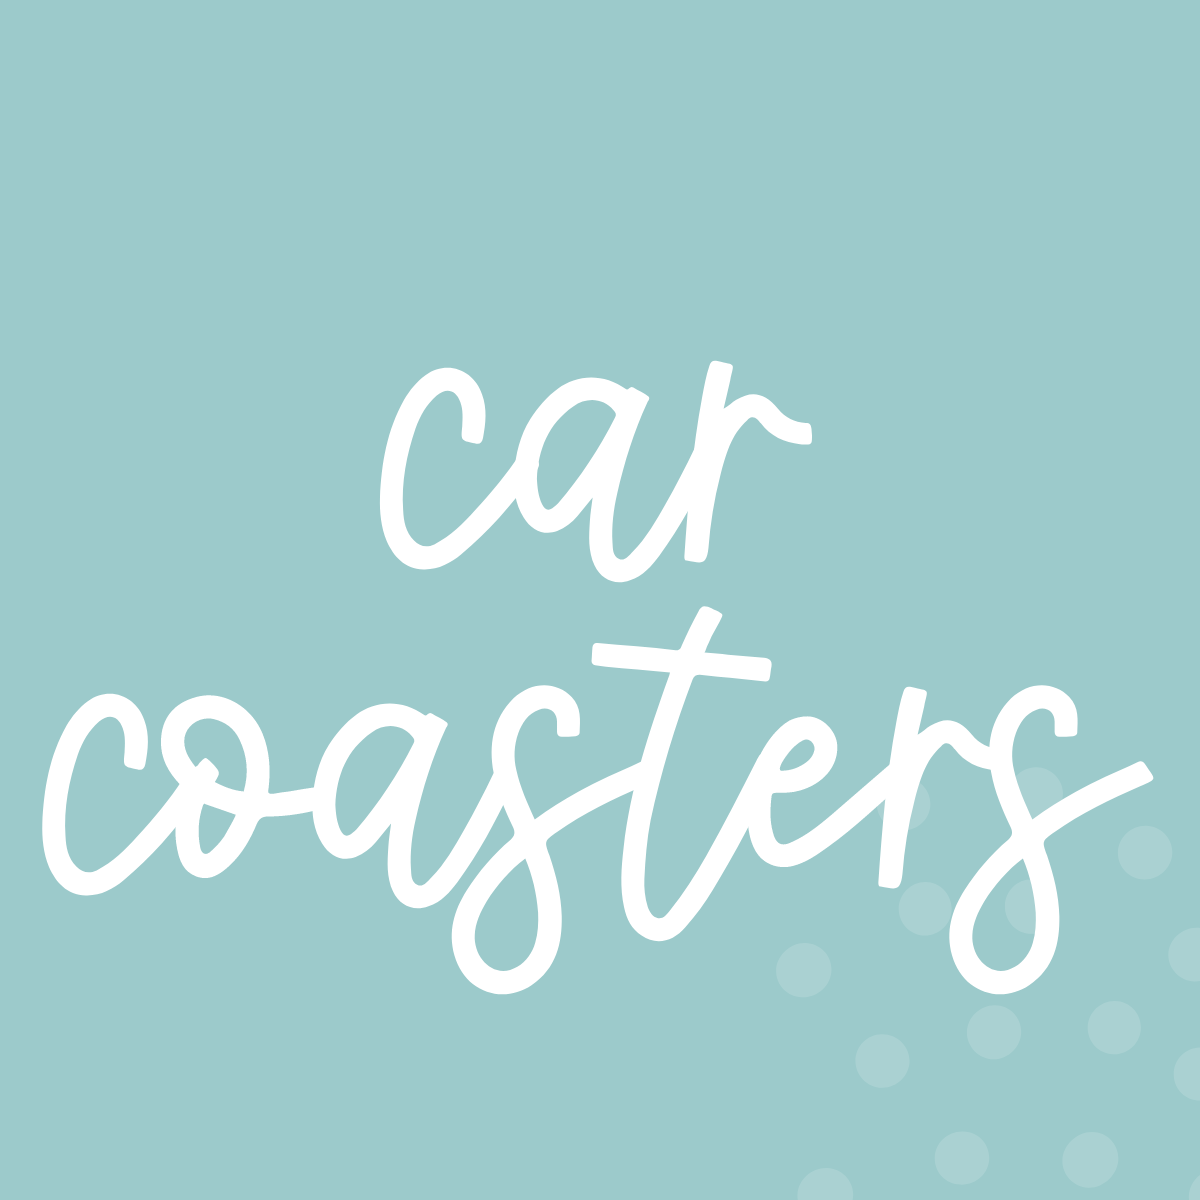 Car Coasters